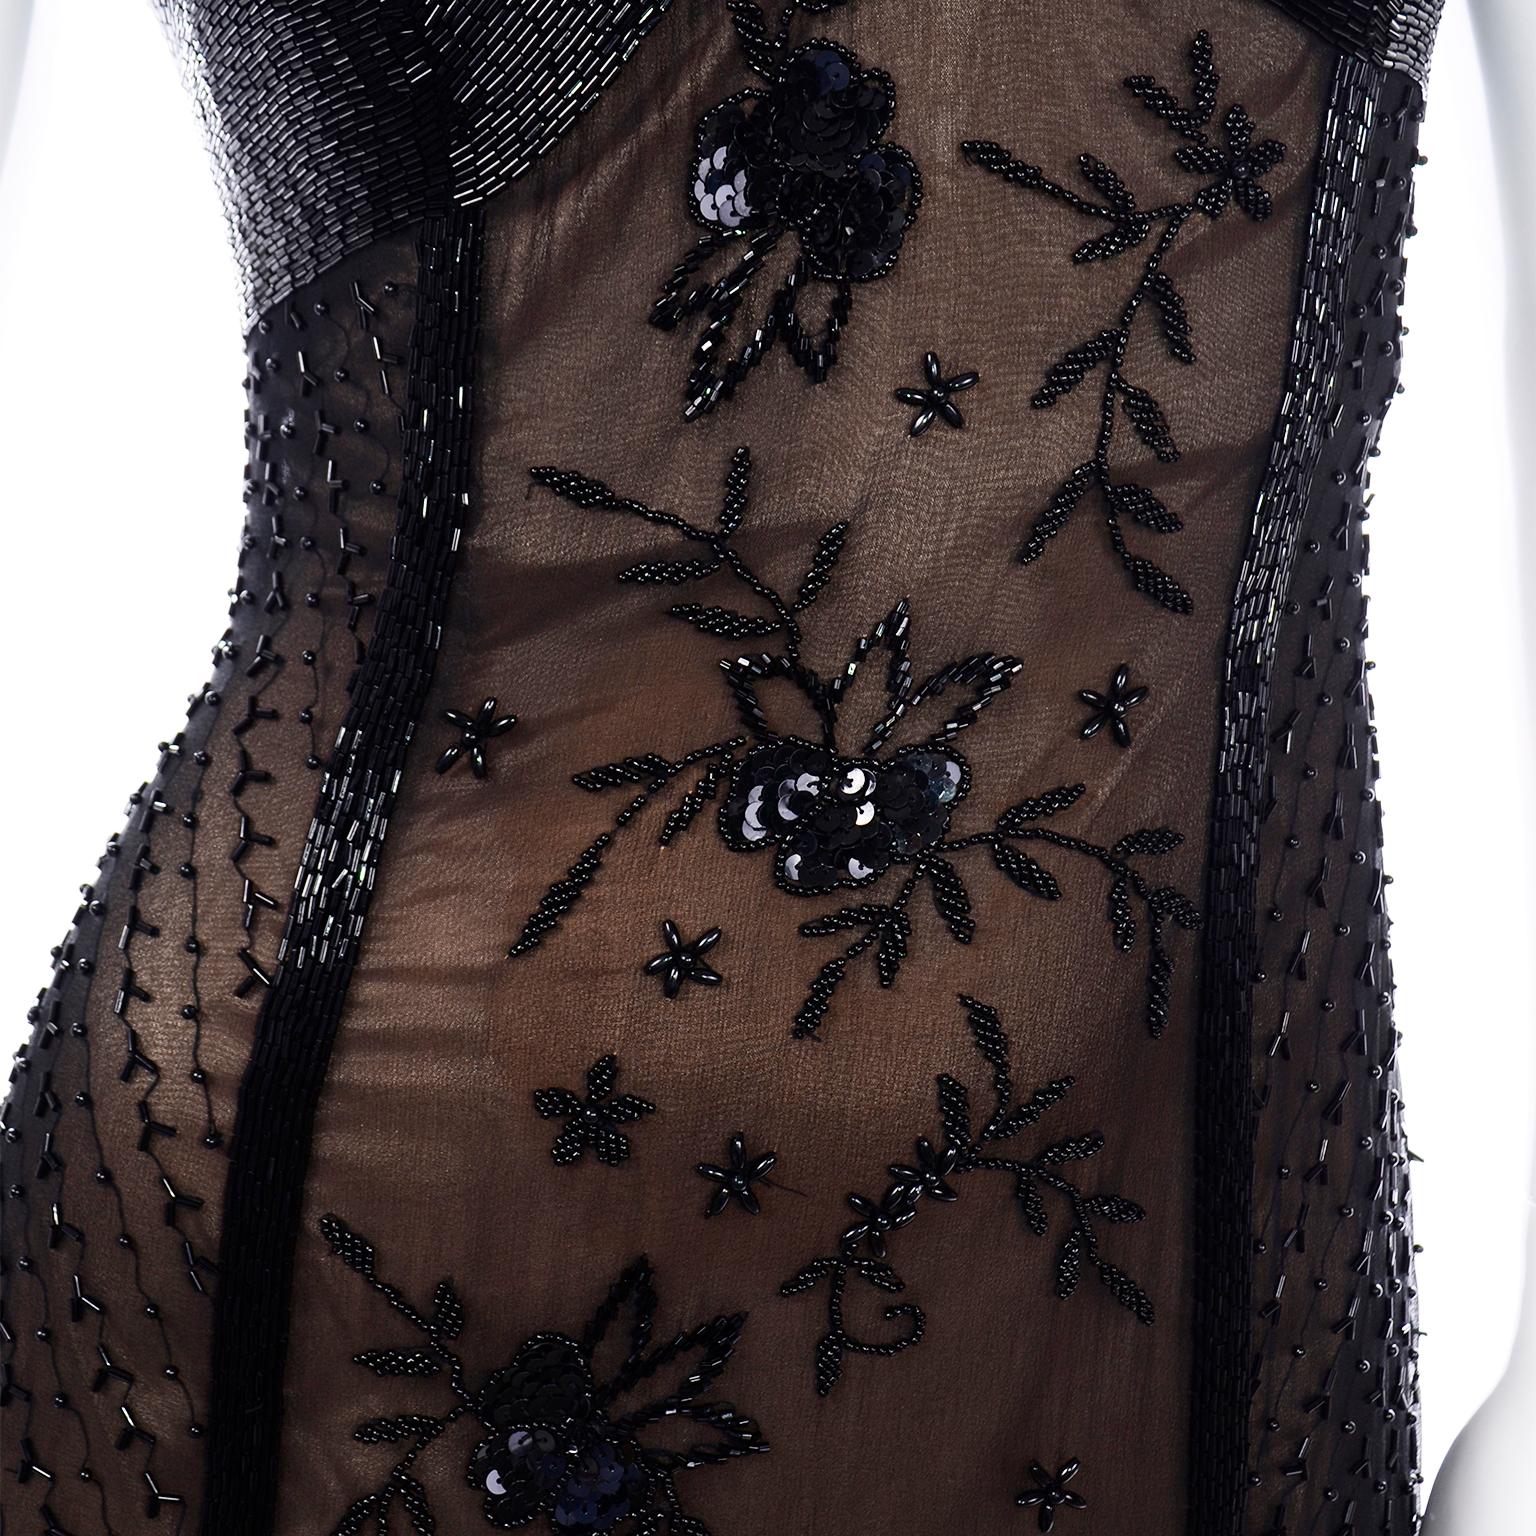 Black Beaded Sheer Evening Dress over Beige Under dress w Heavily Beaded Bodice 3